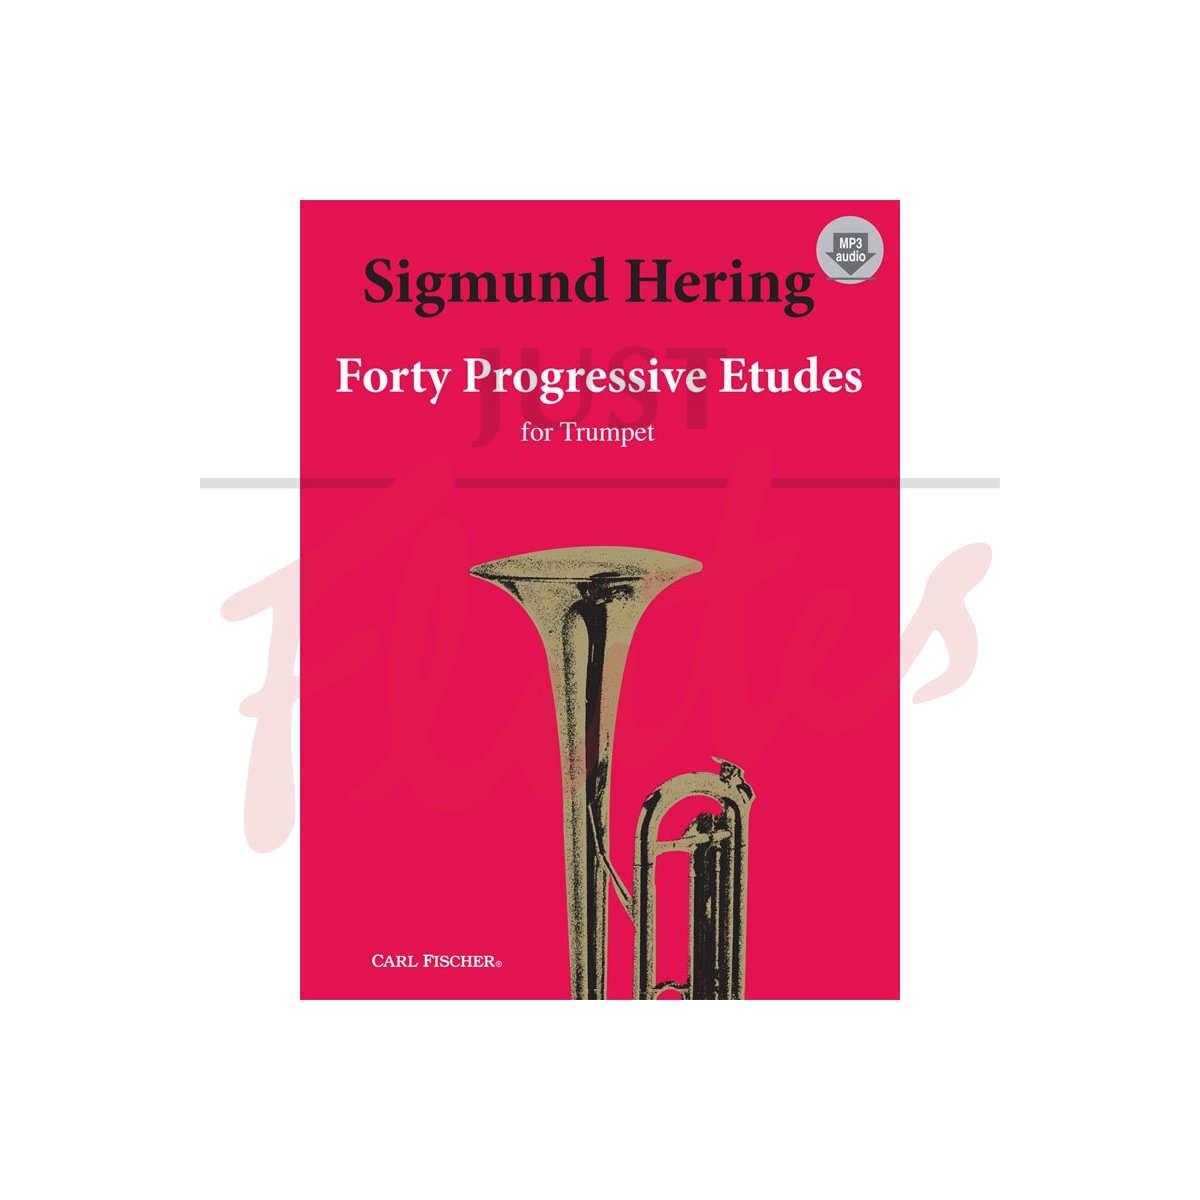 Sigmund Hering: 40 Progressive Etudes. Just Flutes, London